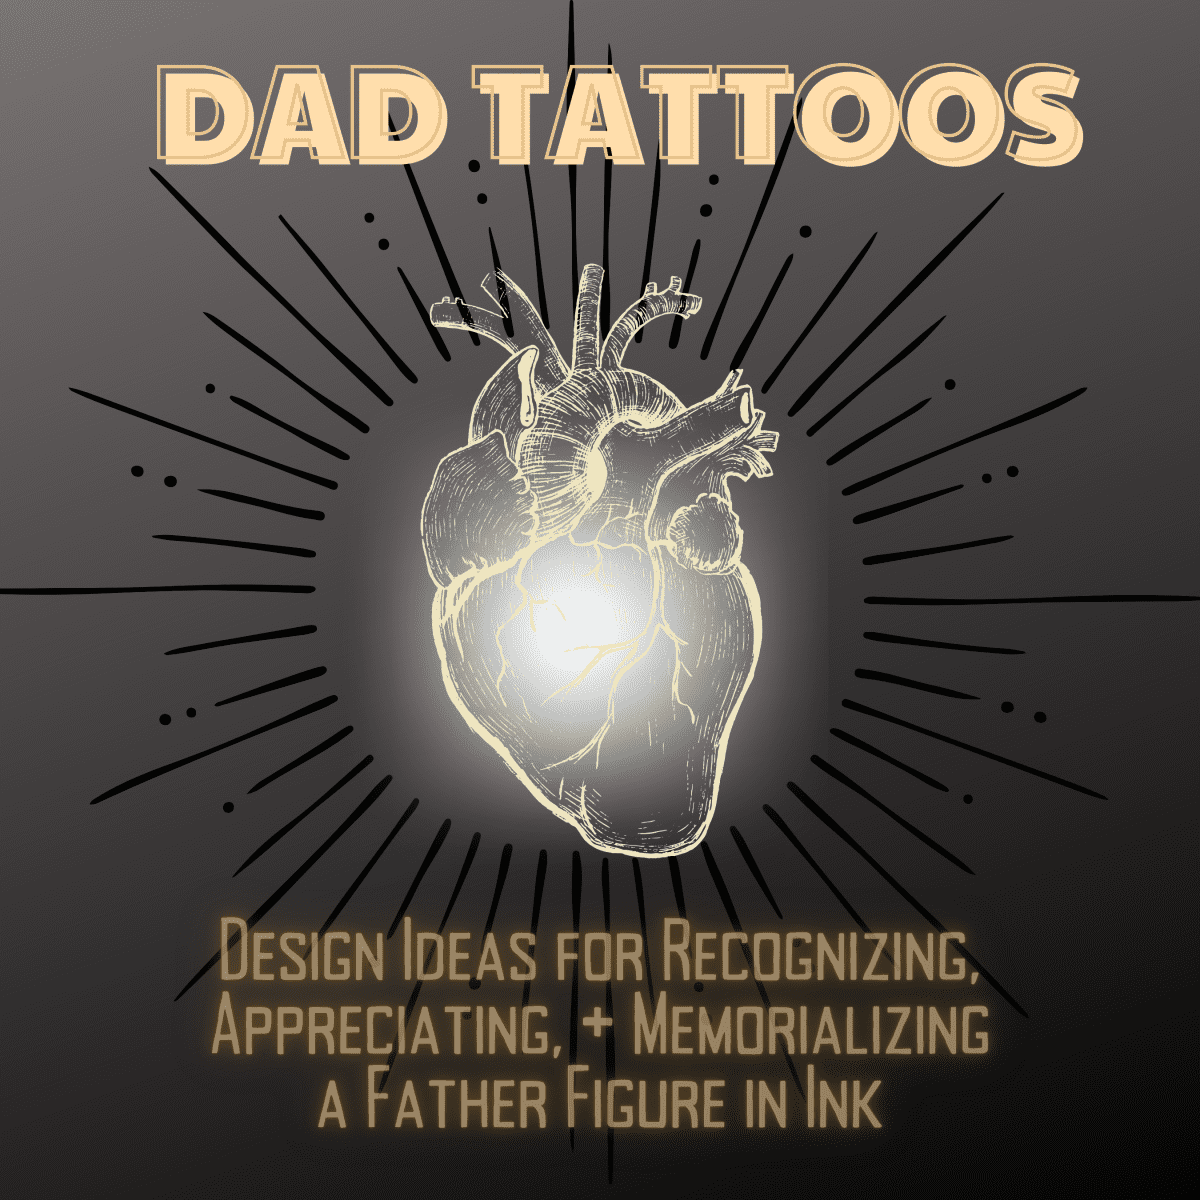 Dad tattoo : r/shittytattoos